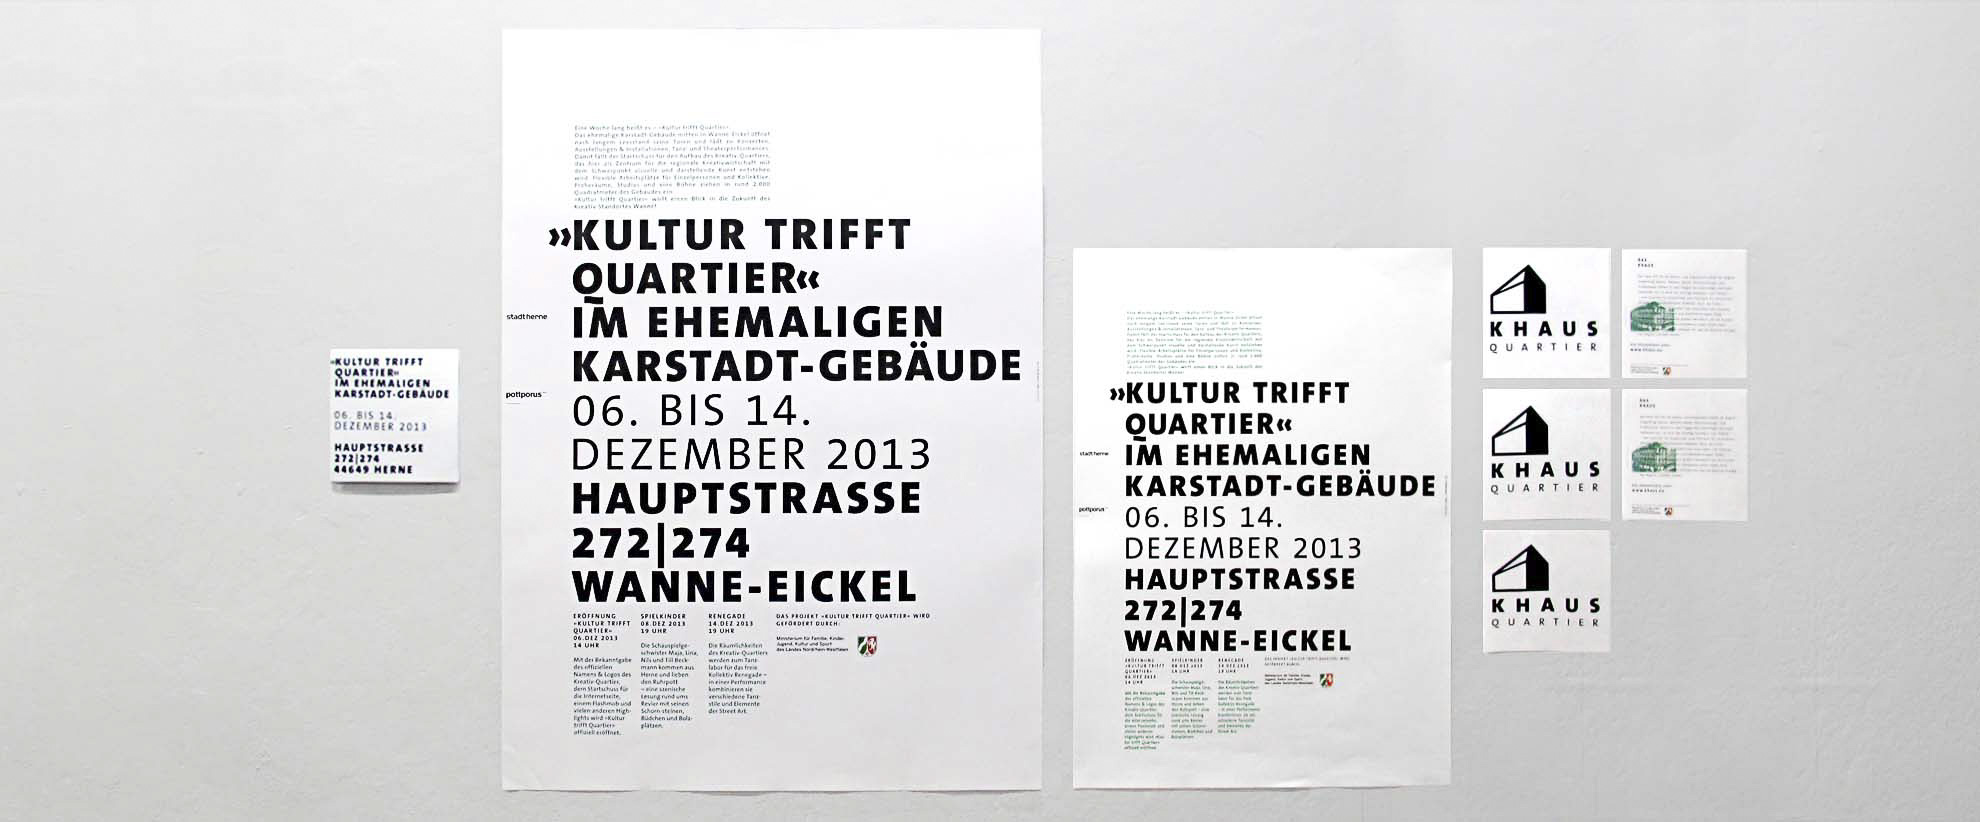 Flyer Gestaltung Khaus Quartier Projektbüro Herne